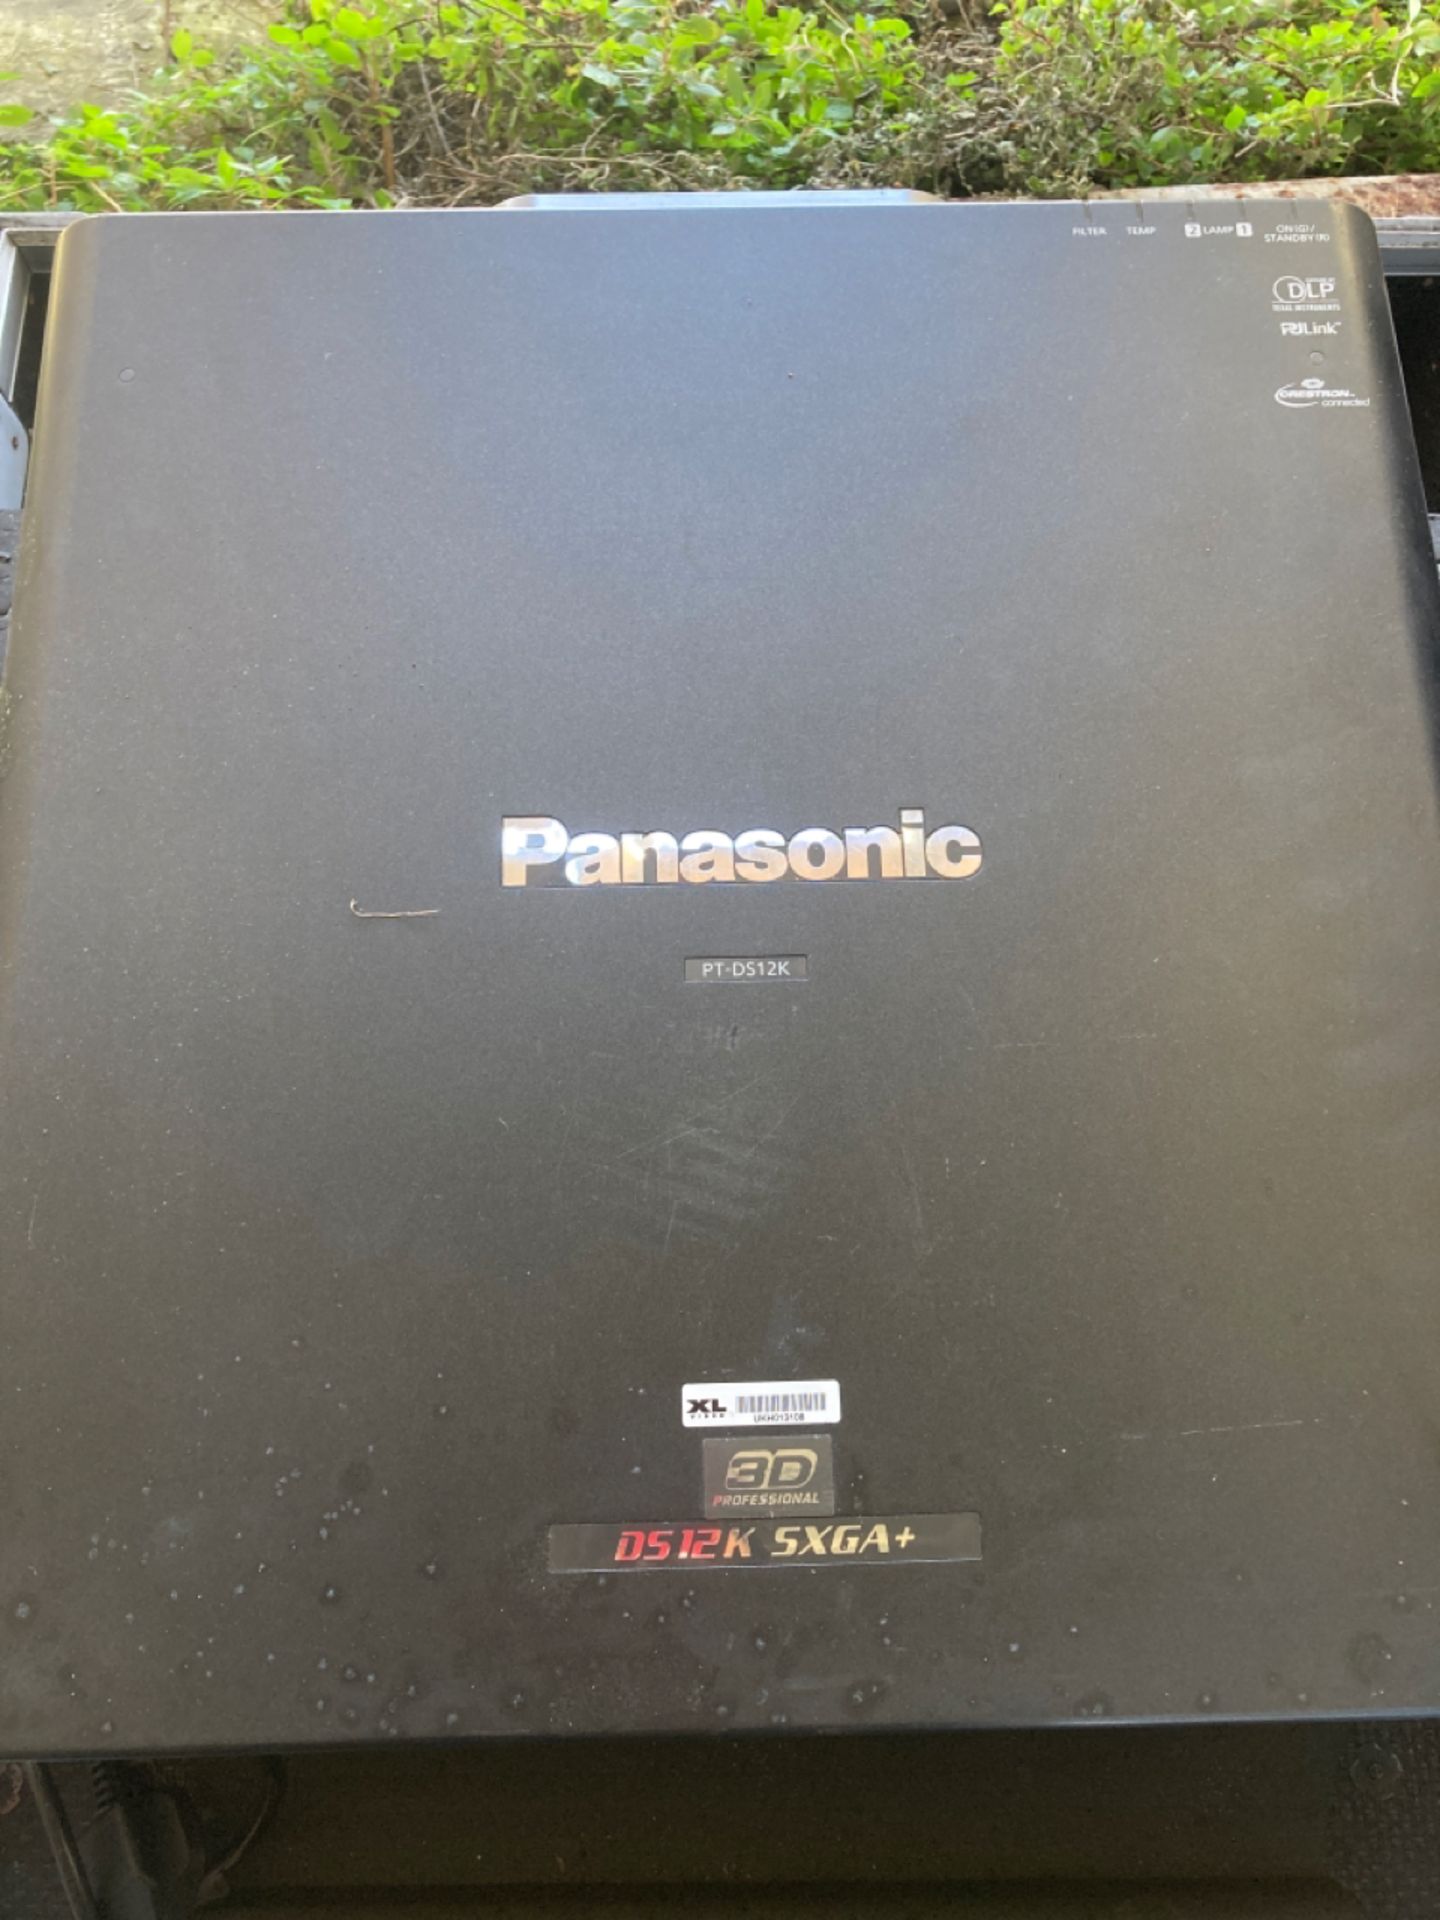 Panasonic projector - Image 3 of 4